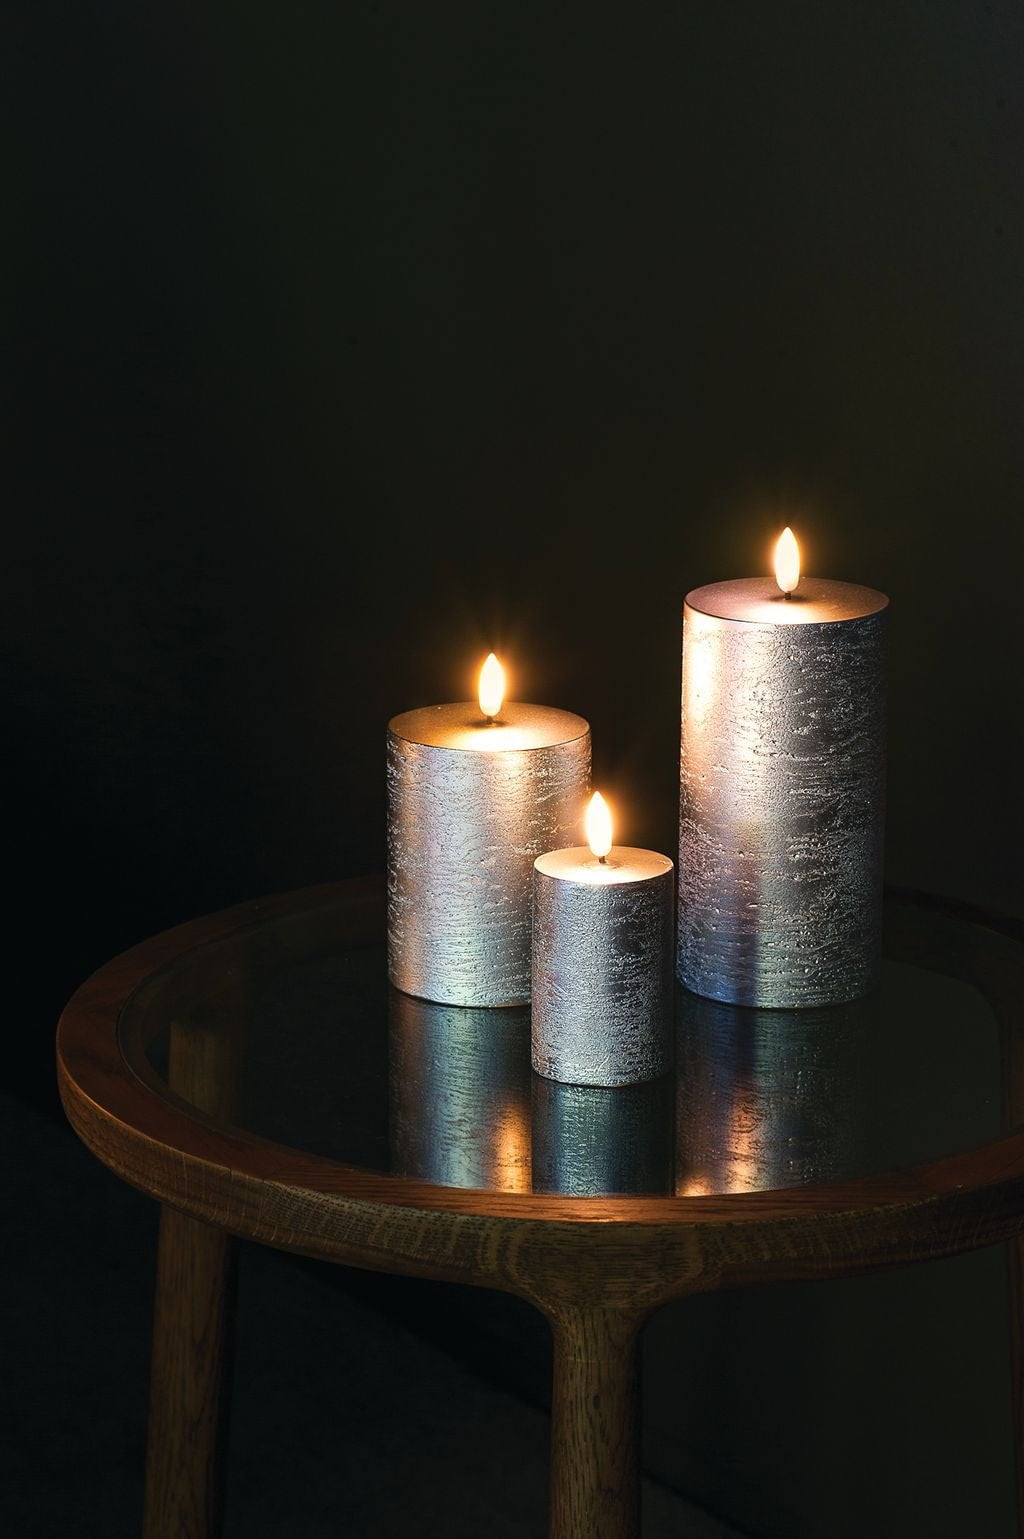 Uyuni Lighting Led Pillar Candle 3 D Flame øx H 5,8x10,1 Cm, Metallic Silver